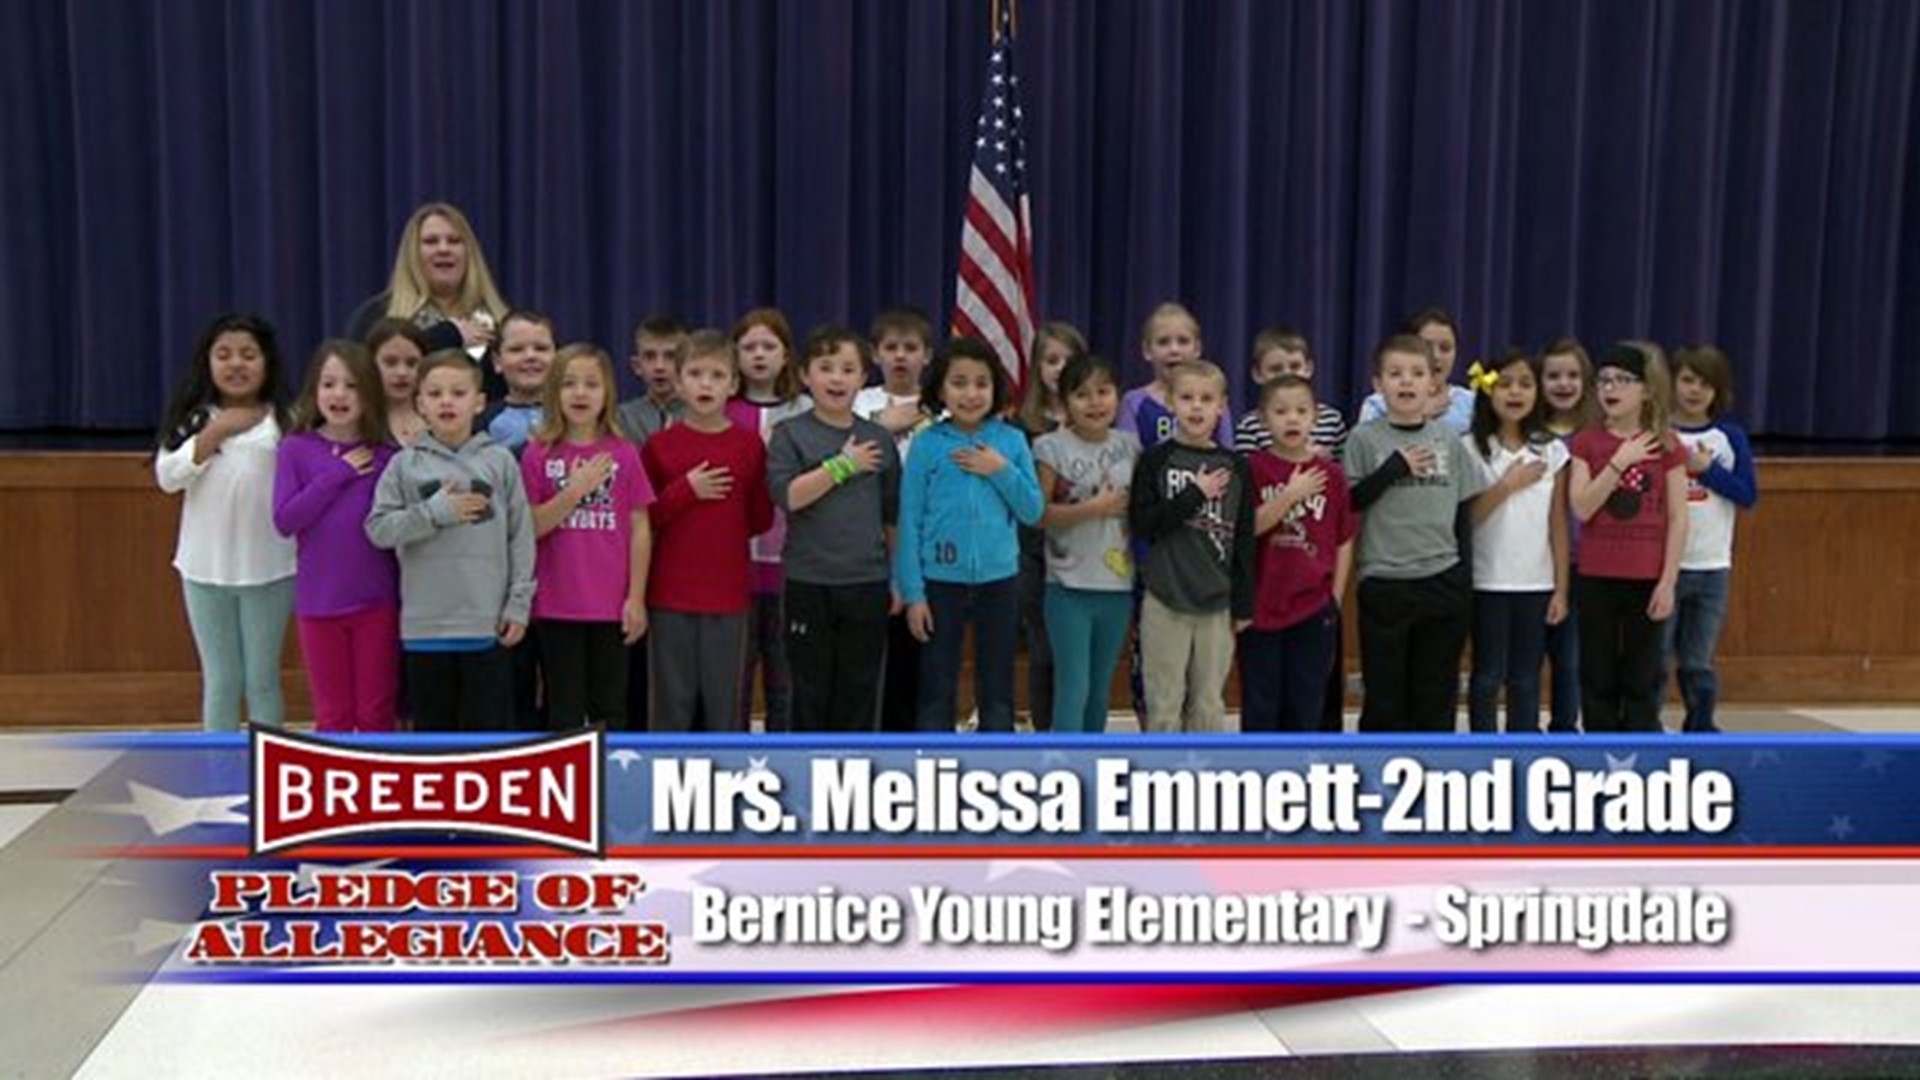 Bernice Young Elementary - Springdale, Mrs. Emmett - Second Grade